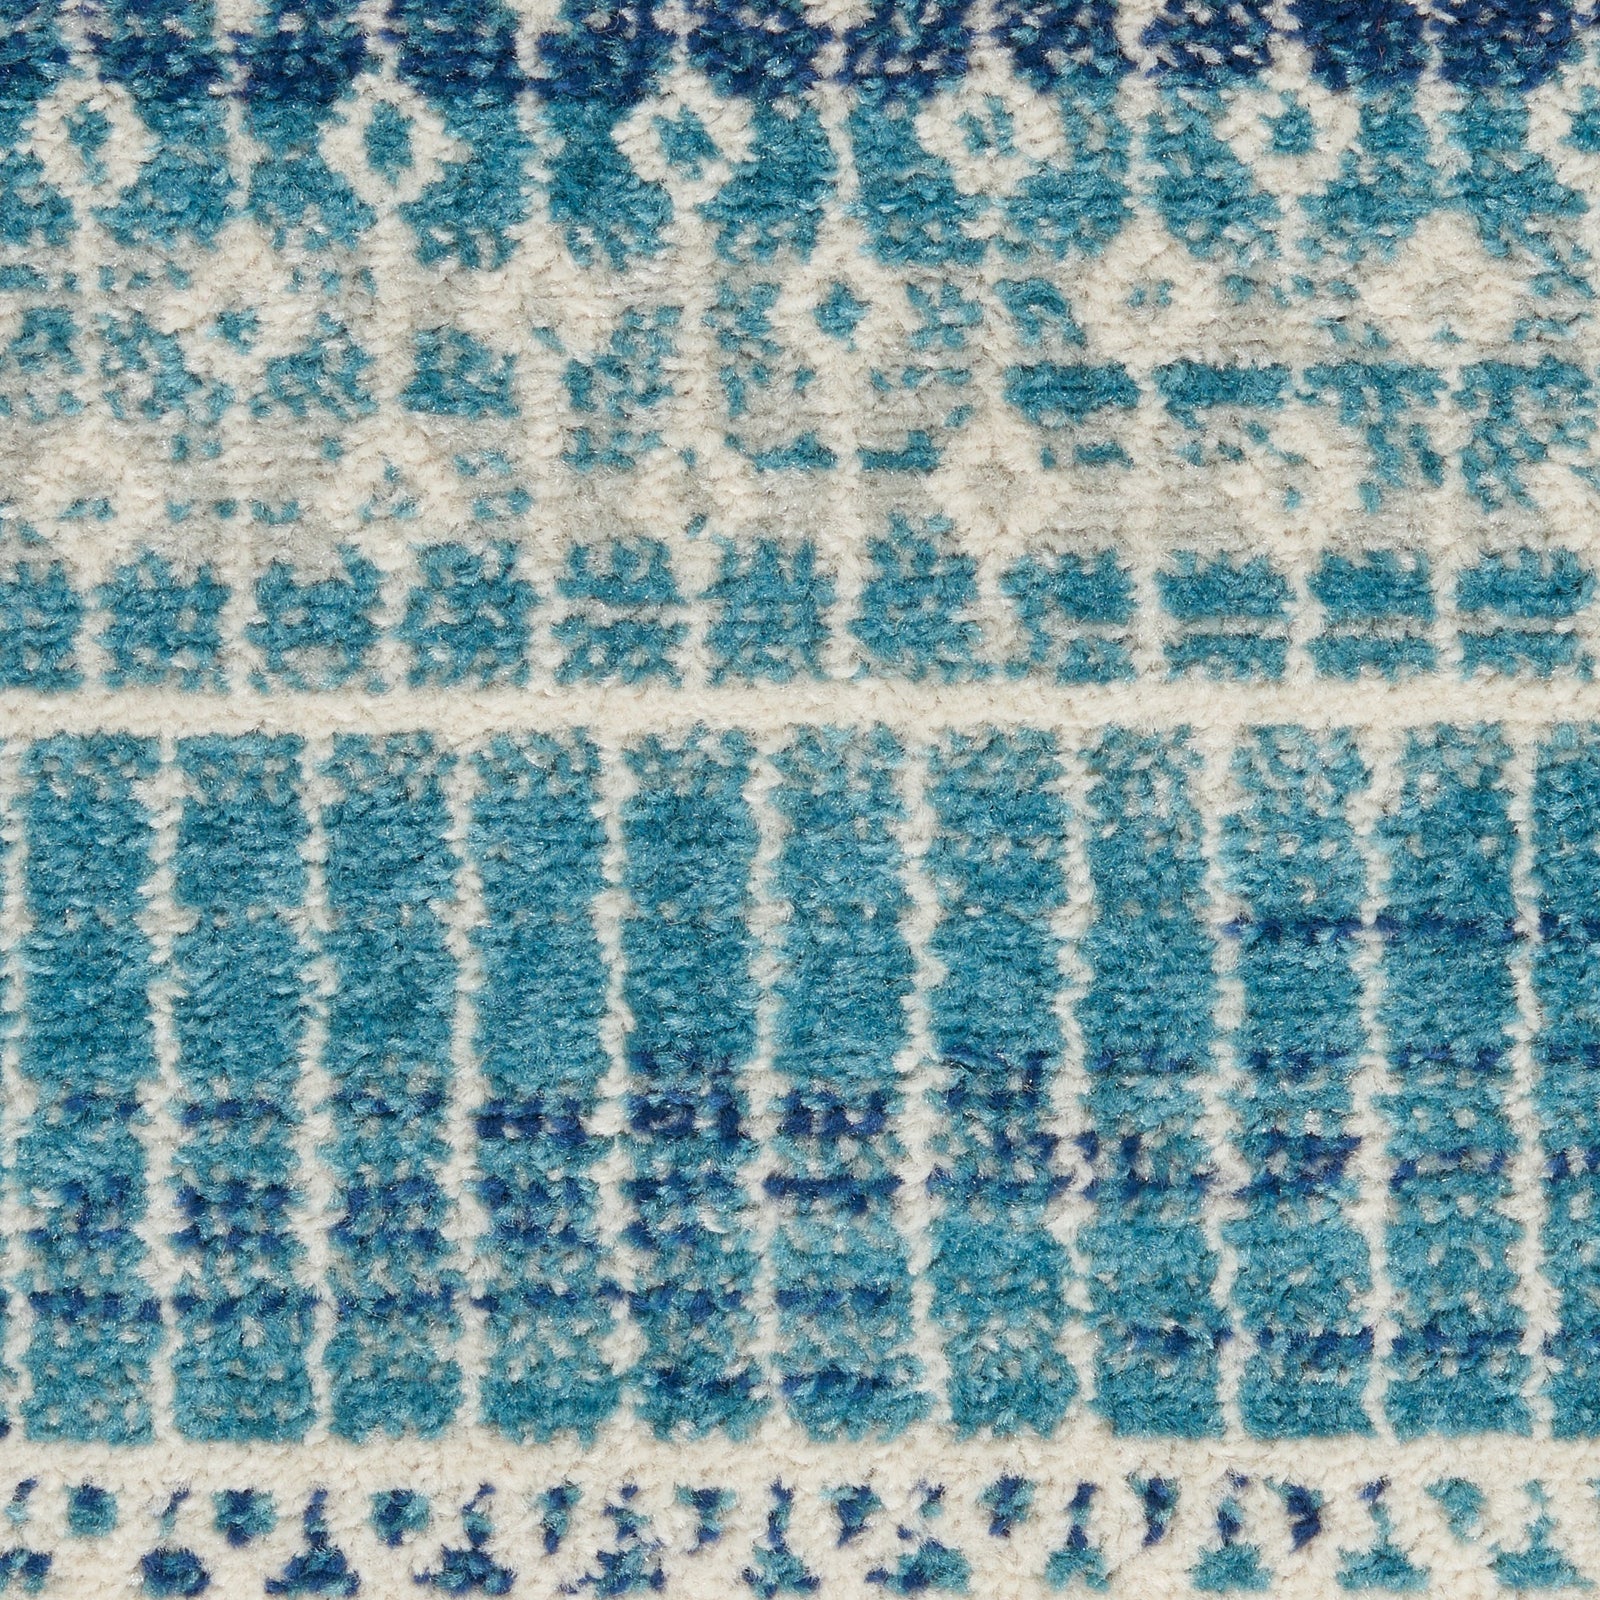 2’ X 3’ Navy Blue Ornate Stripes Scatter Rug